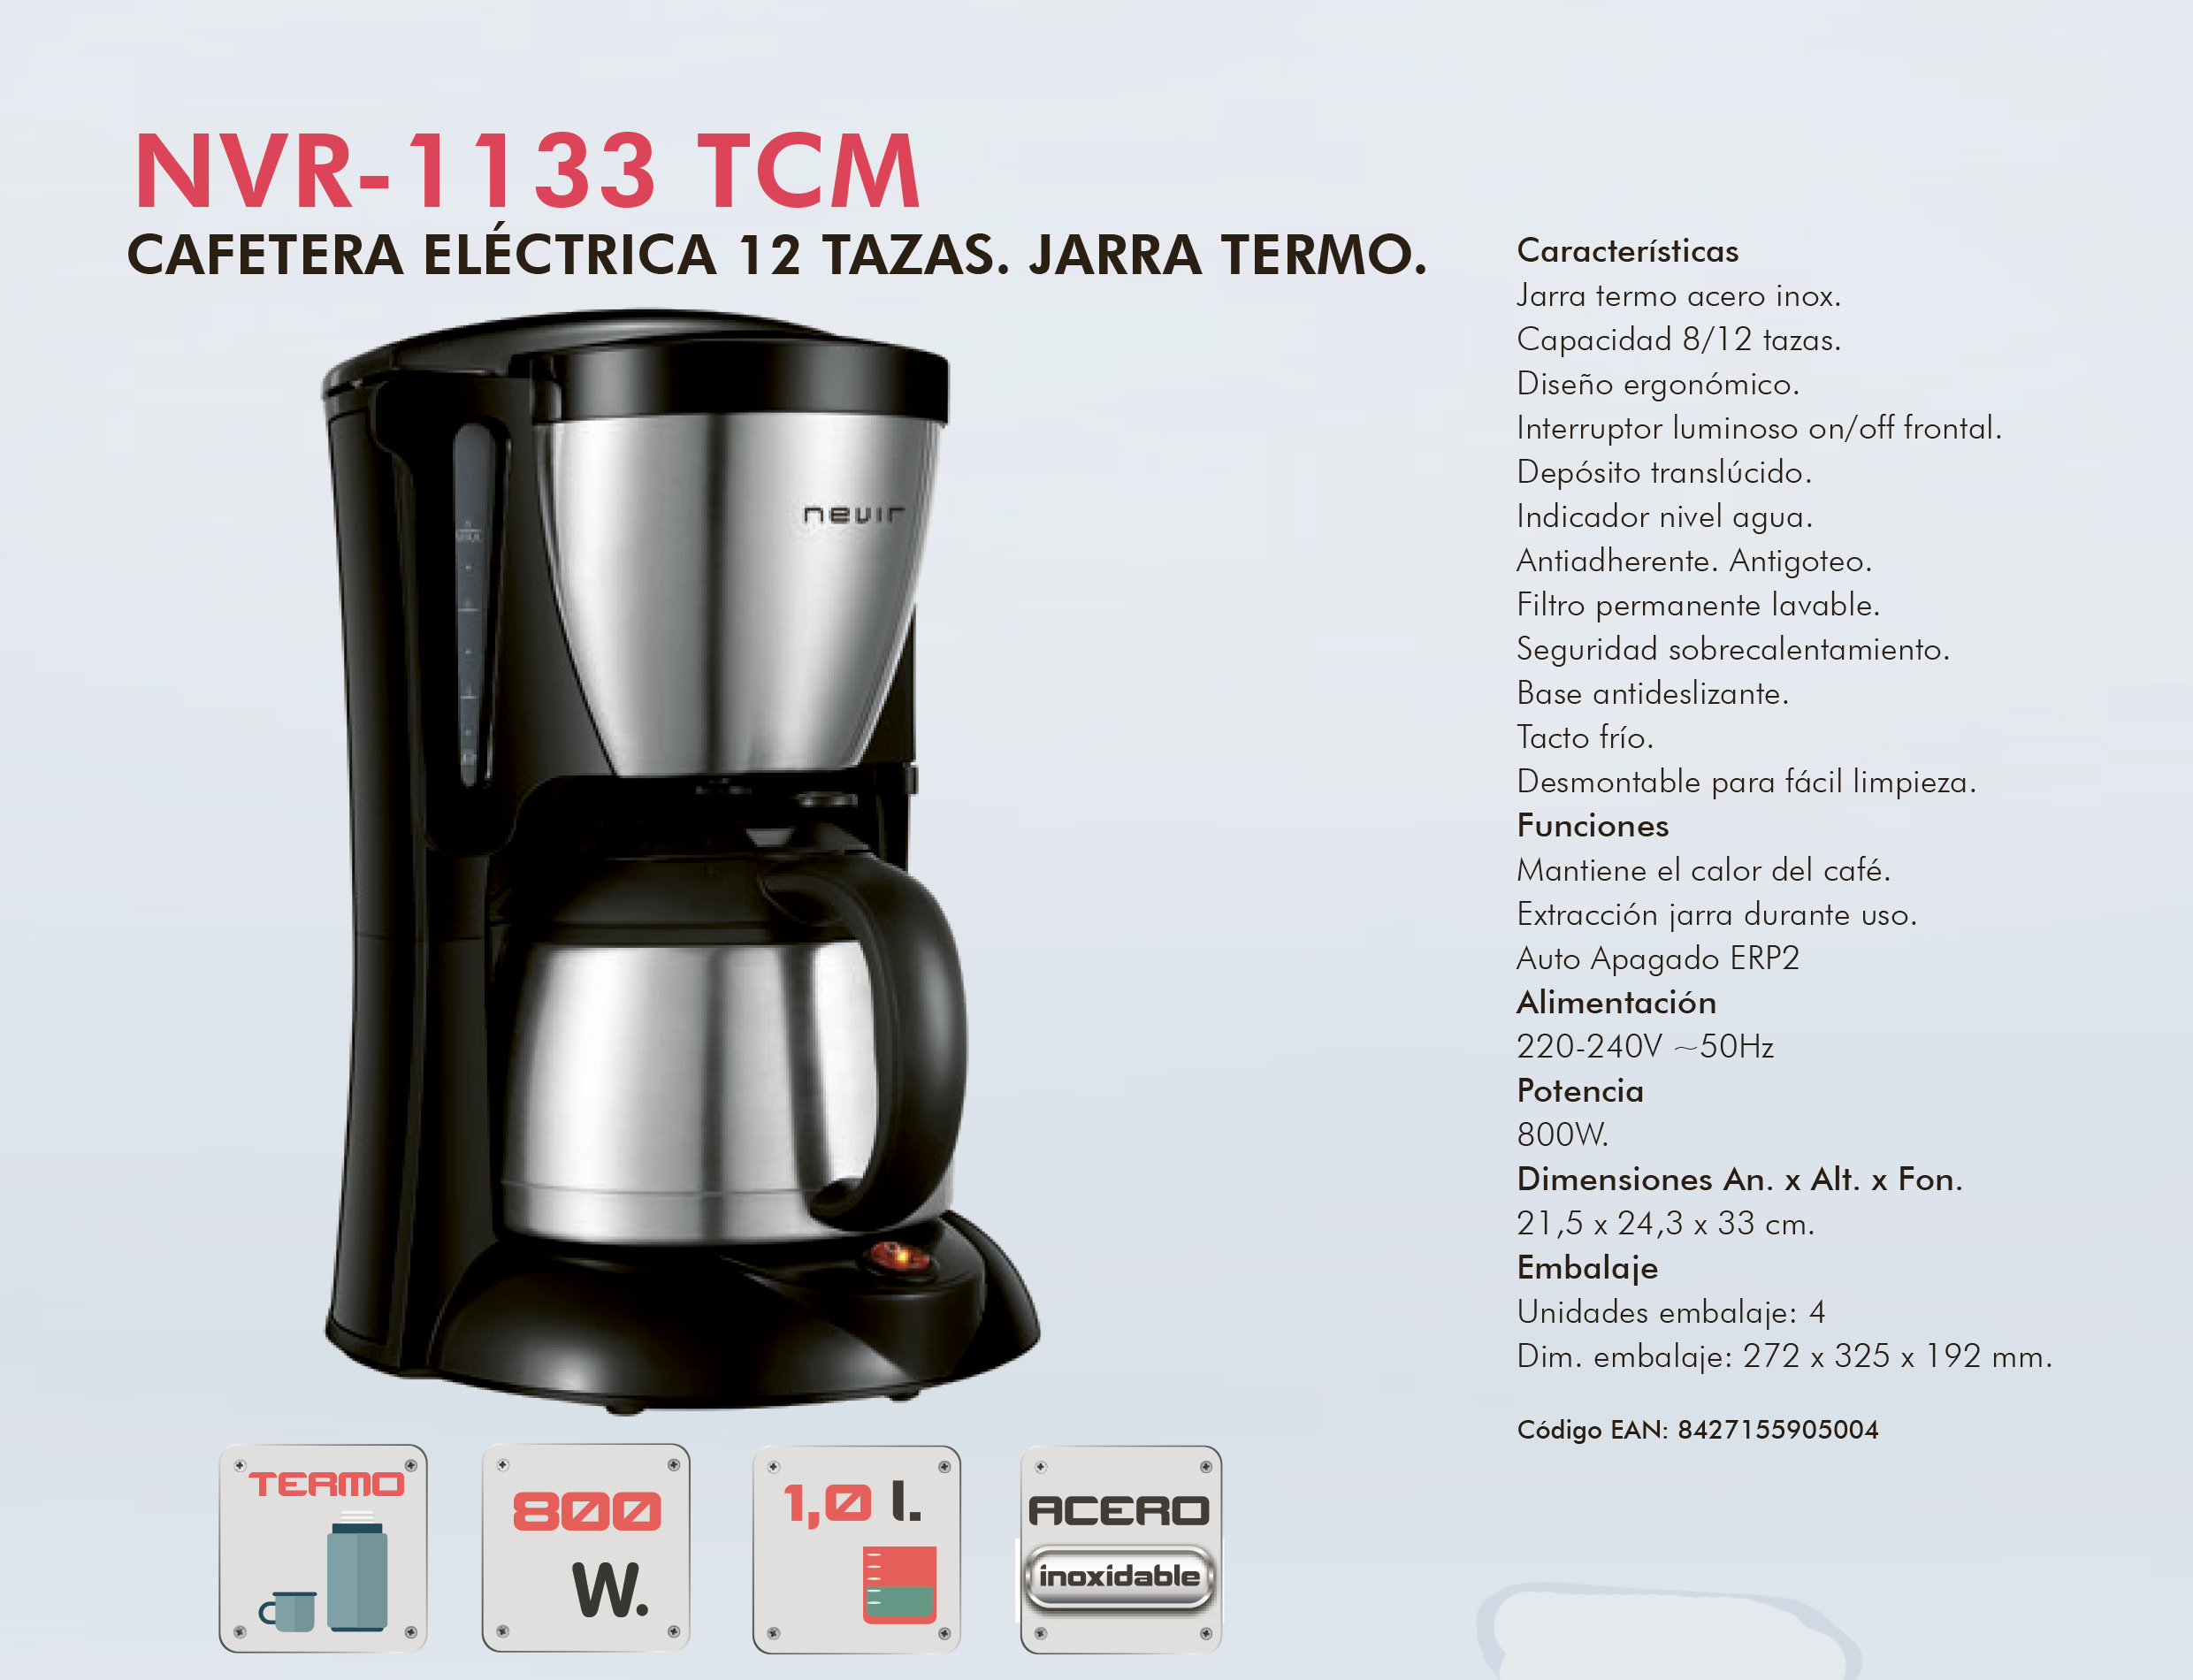 Cafetera electrica nevir nvr - 1132 cm 12 tazas - 800w